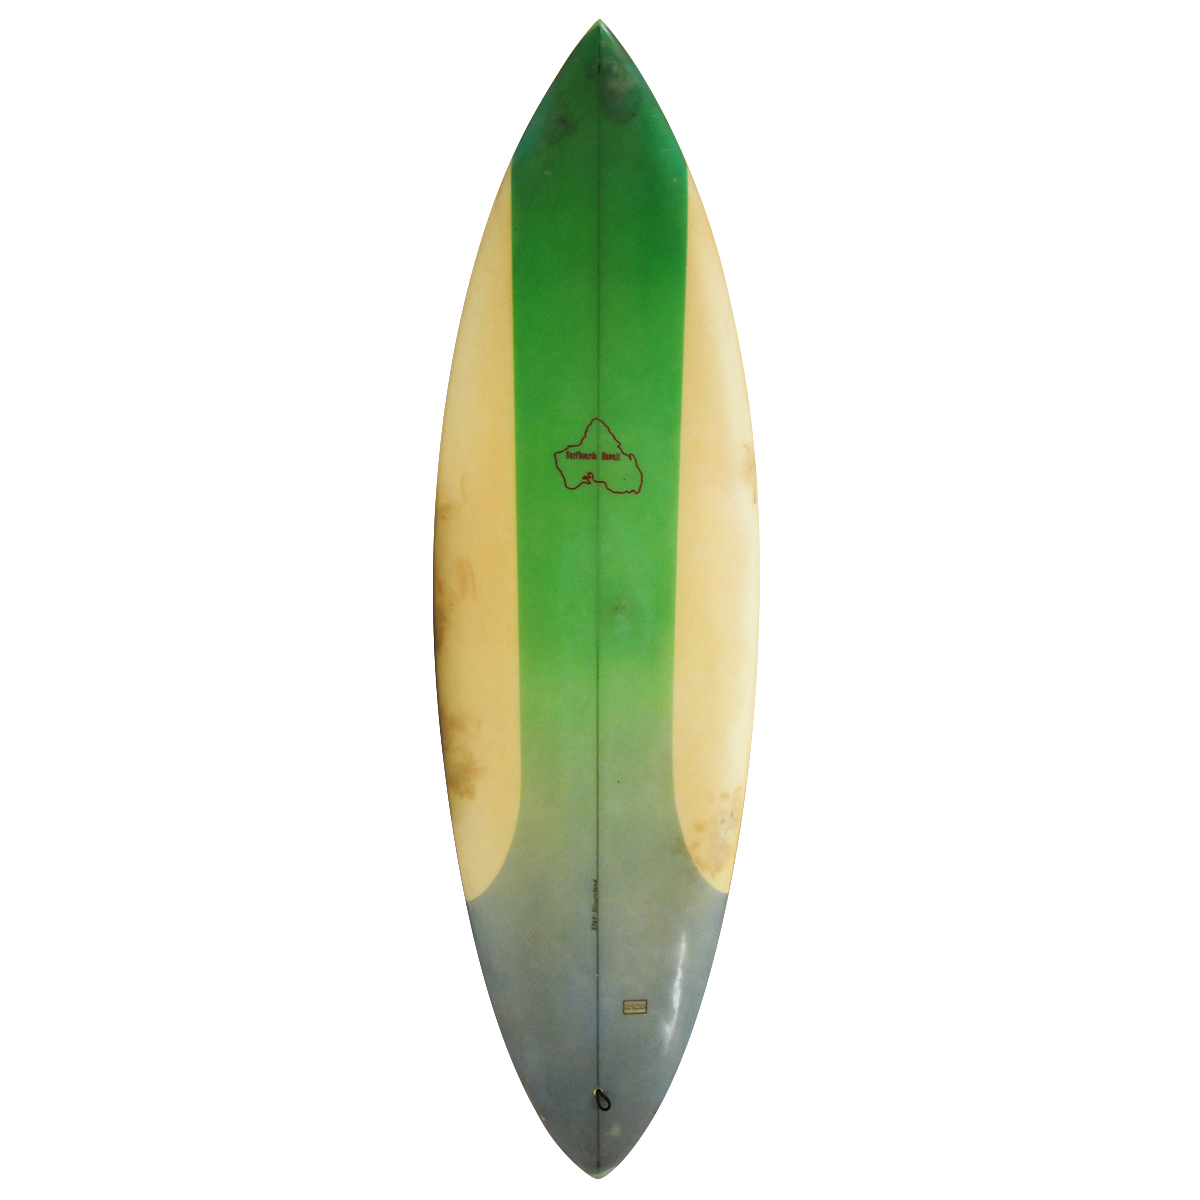 SURFBOARDS HAWAII / HYDRO SINGLE 5`10 shaped by Mike Slingerland